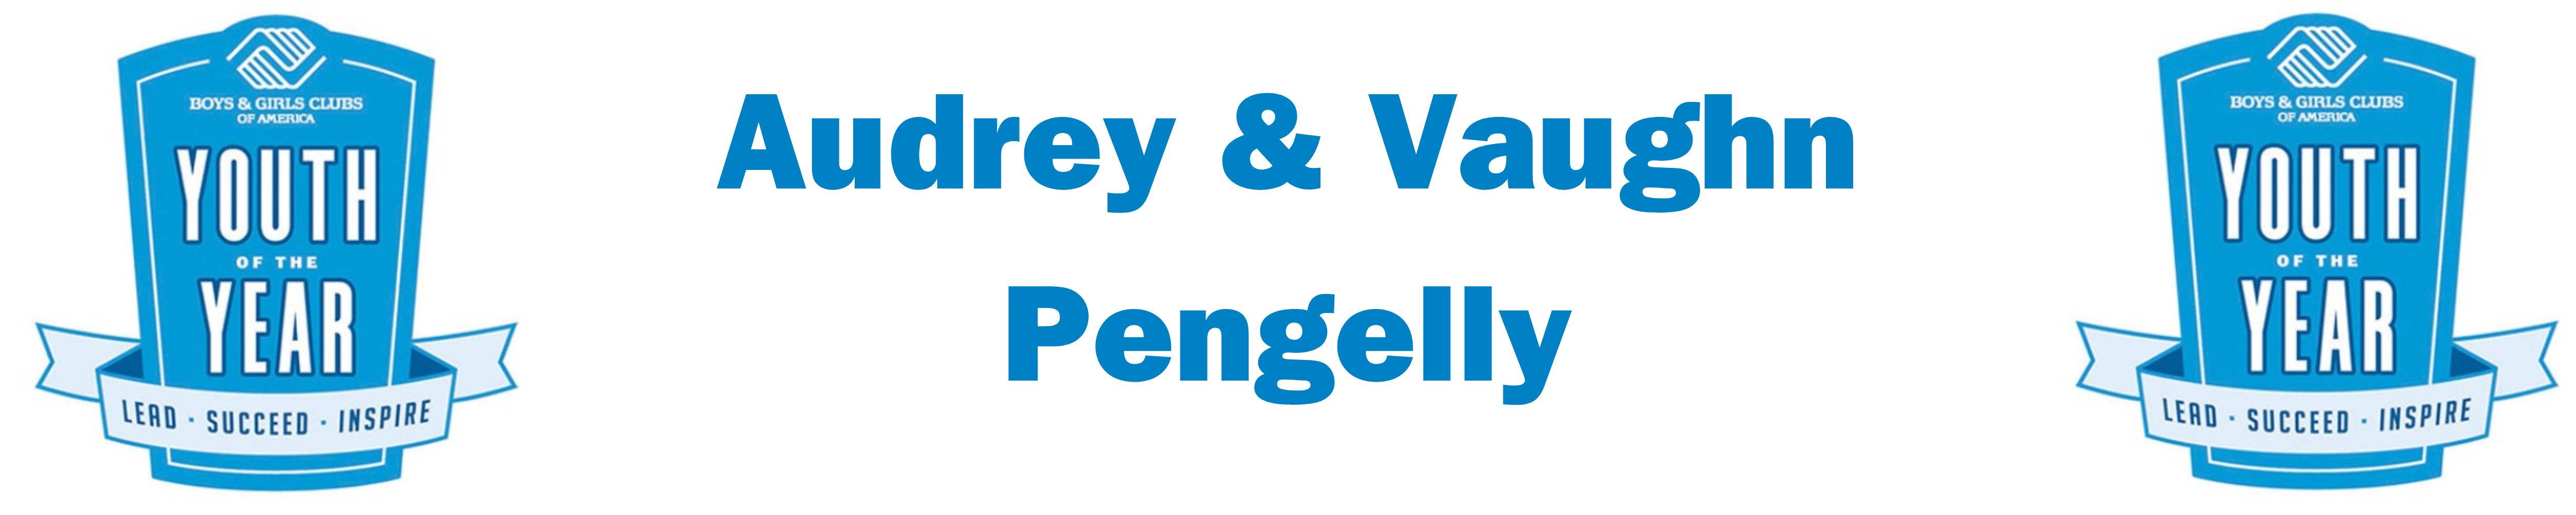 Audrey & Vaughn Pengelly